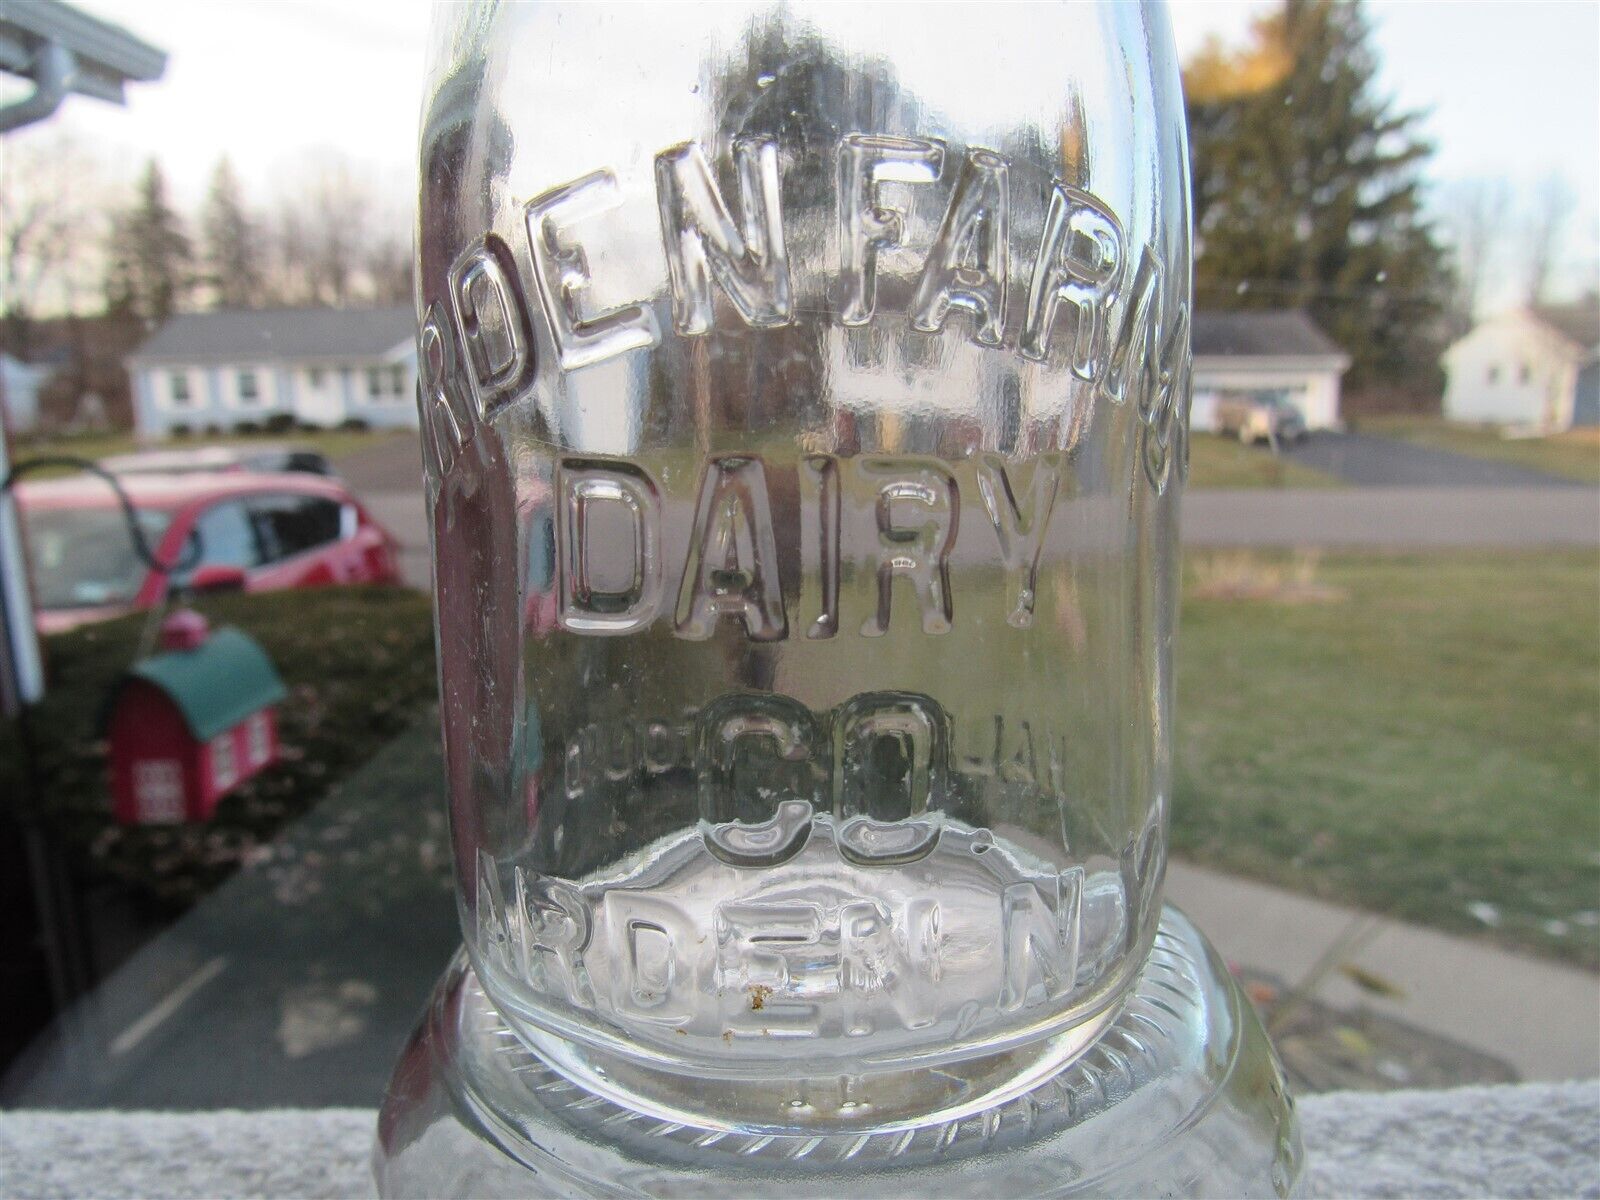 TREHP Milk Bottle Arden Farms Dairy Co Arden NY ORANGE COUNTY 1931